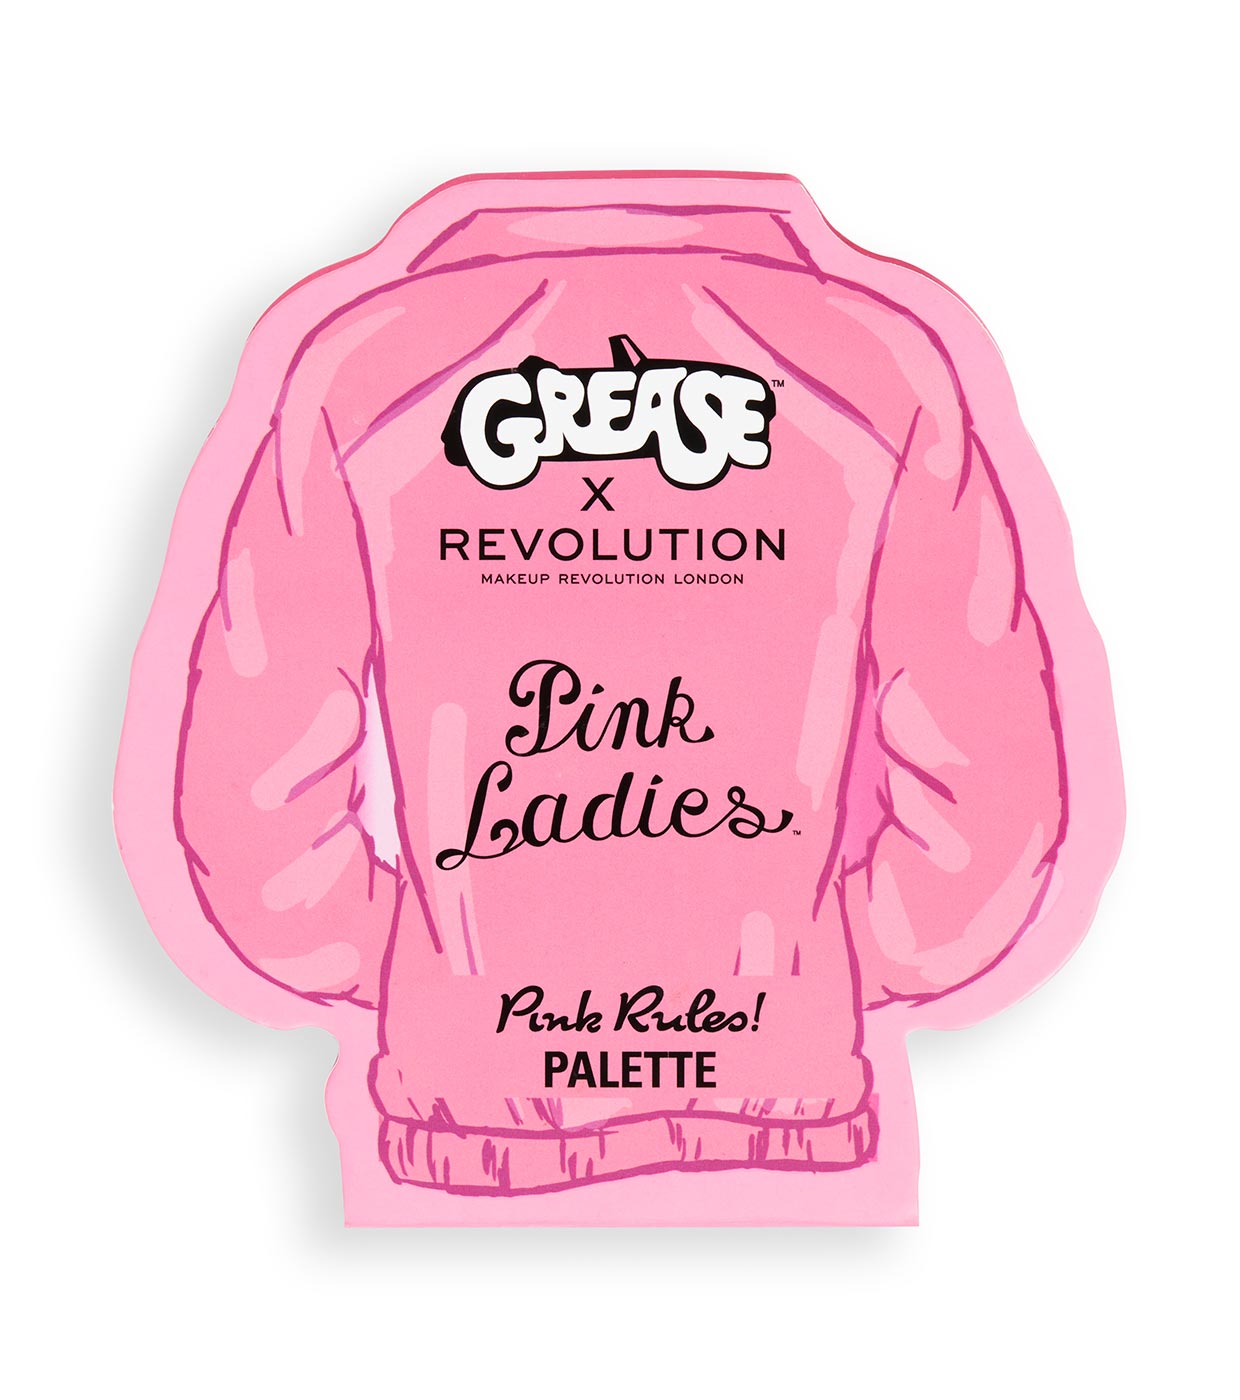 https://www.maquibeauty.com/images/productos/revolution-grease-x-revolution-paleta-de-sombras-pink-ladies-2-78505.jpeg